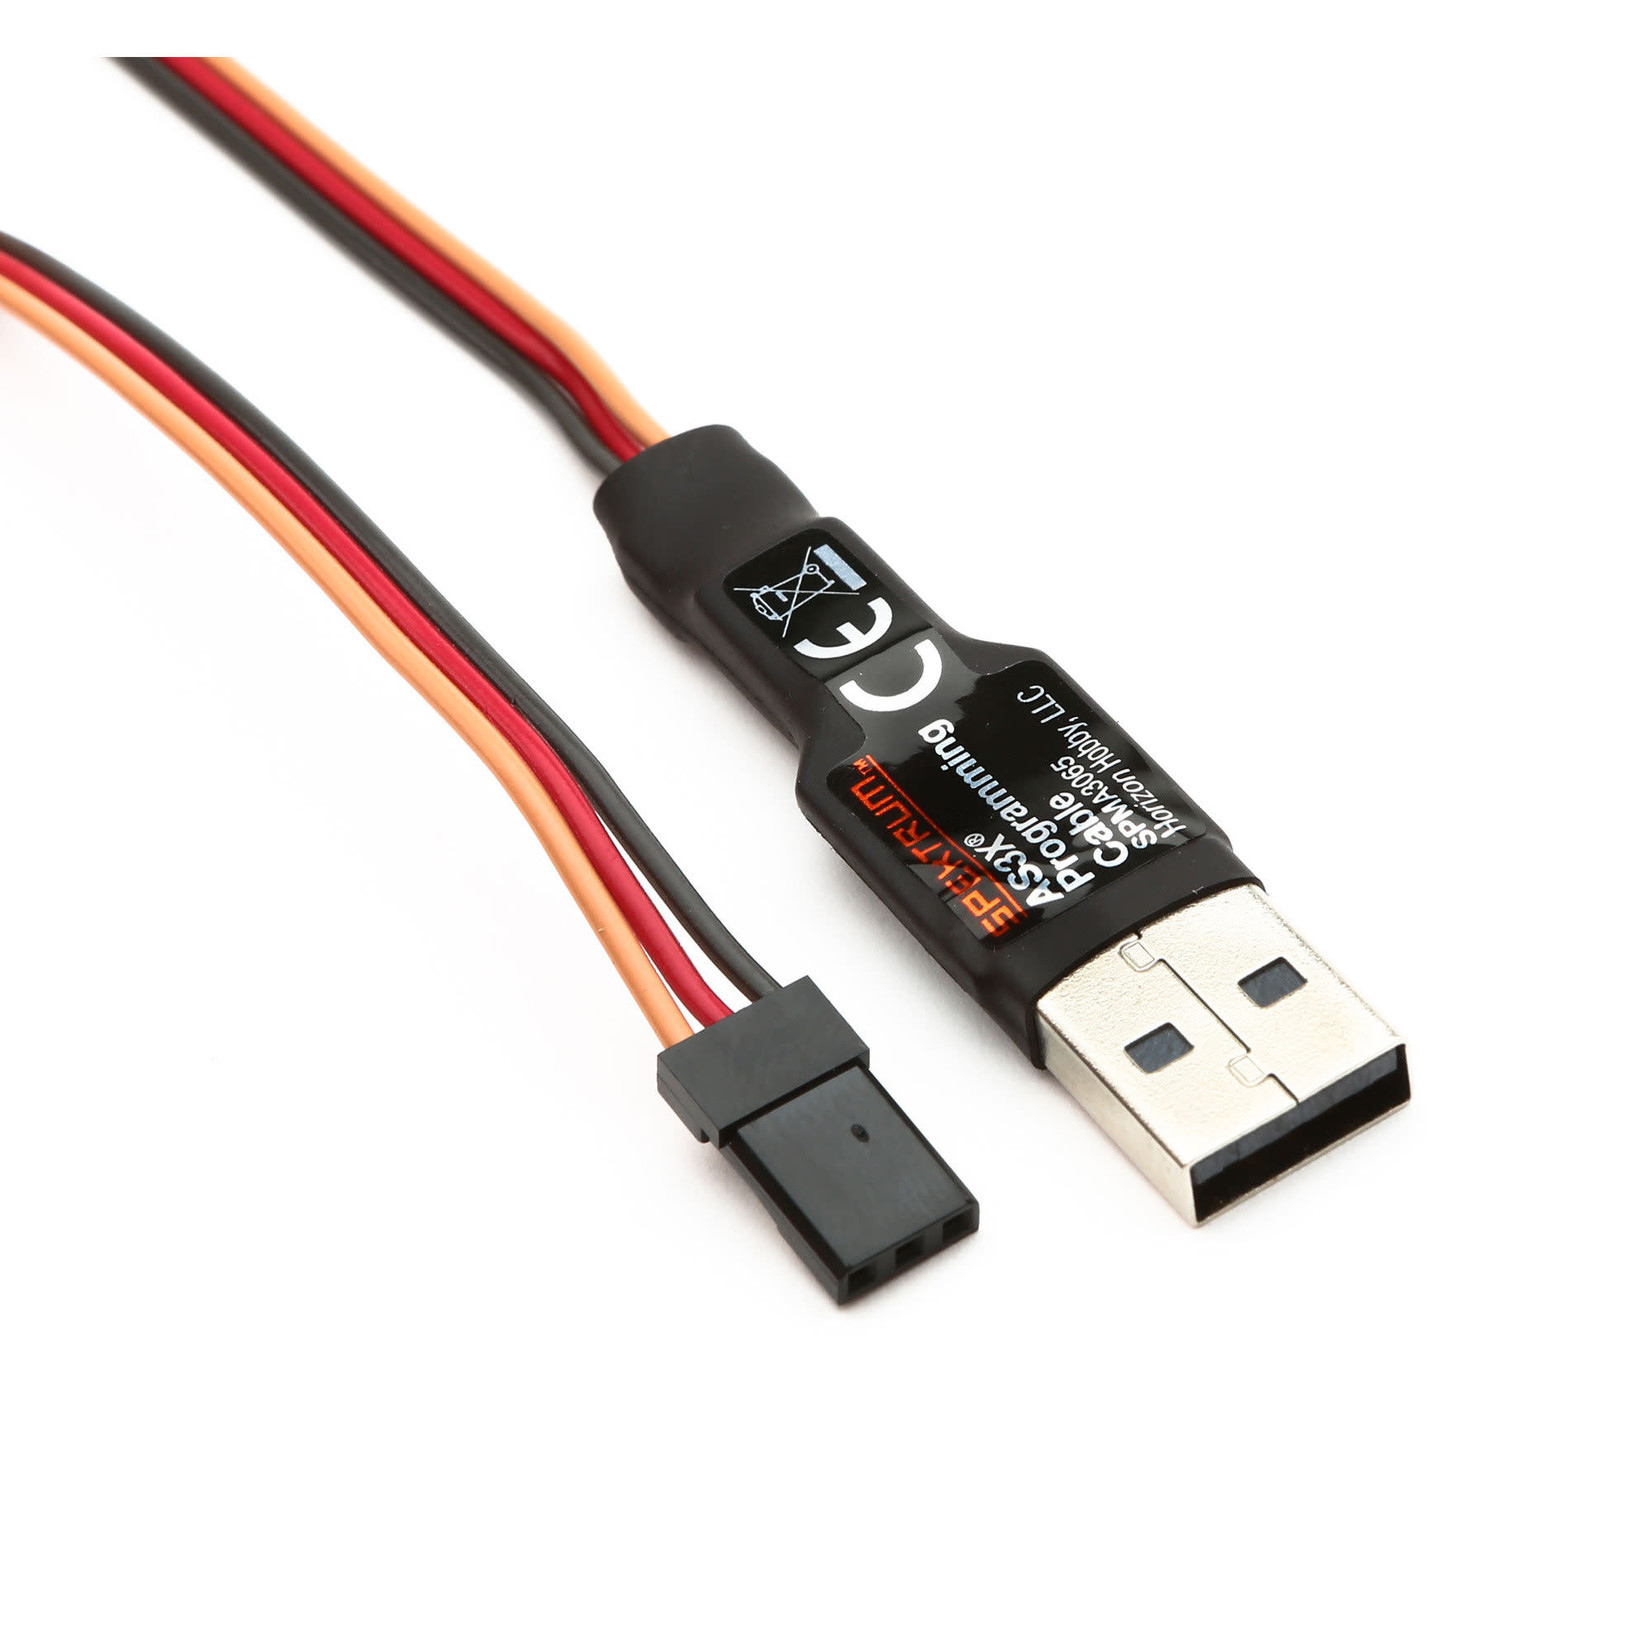 Spektrum TX/RX USB Programming Cable